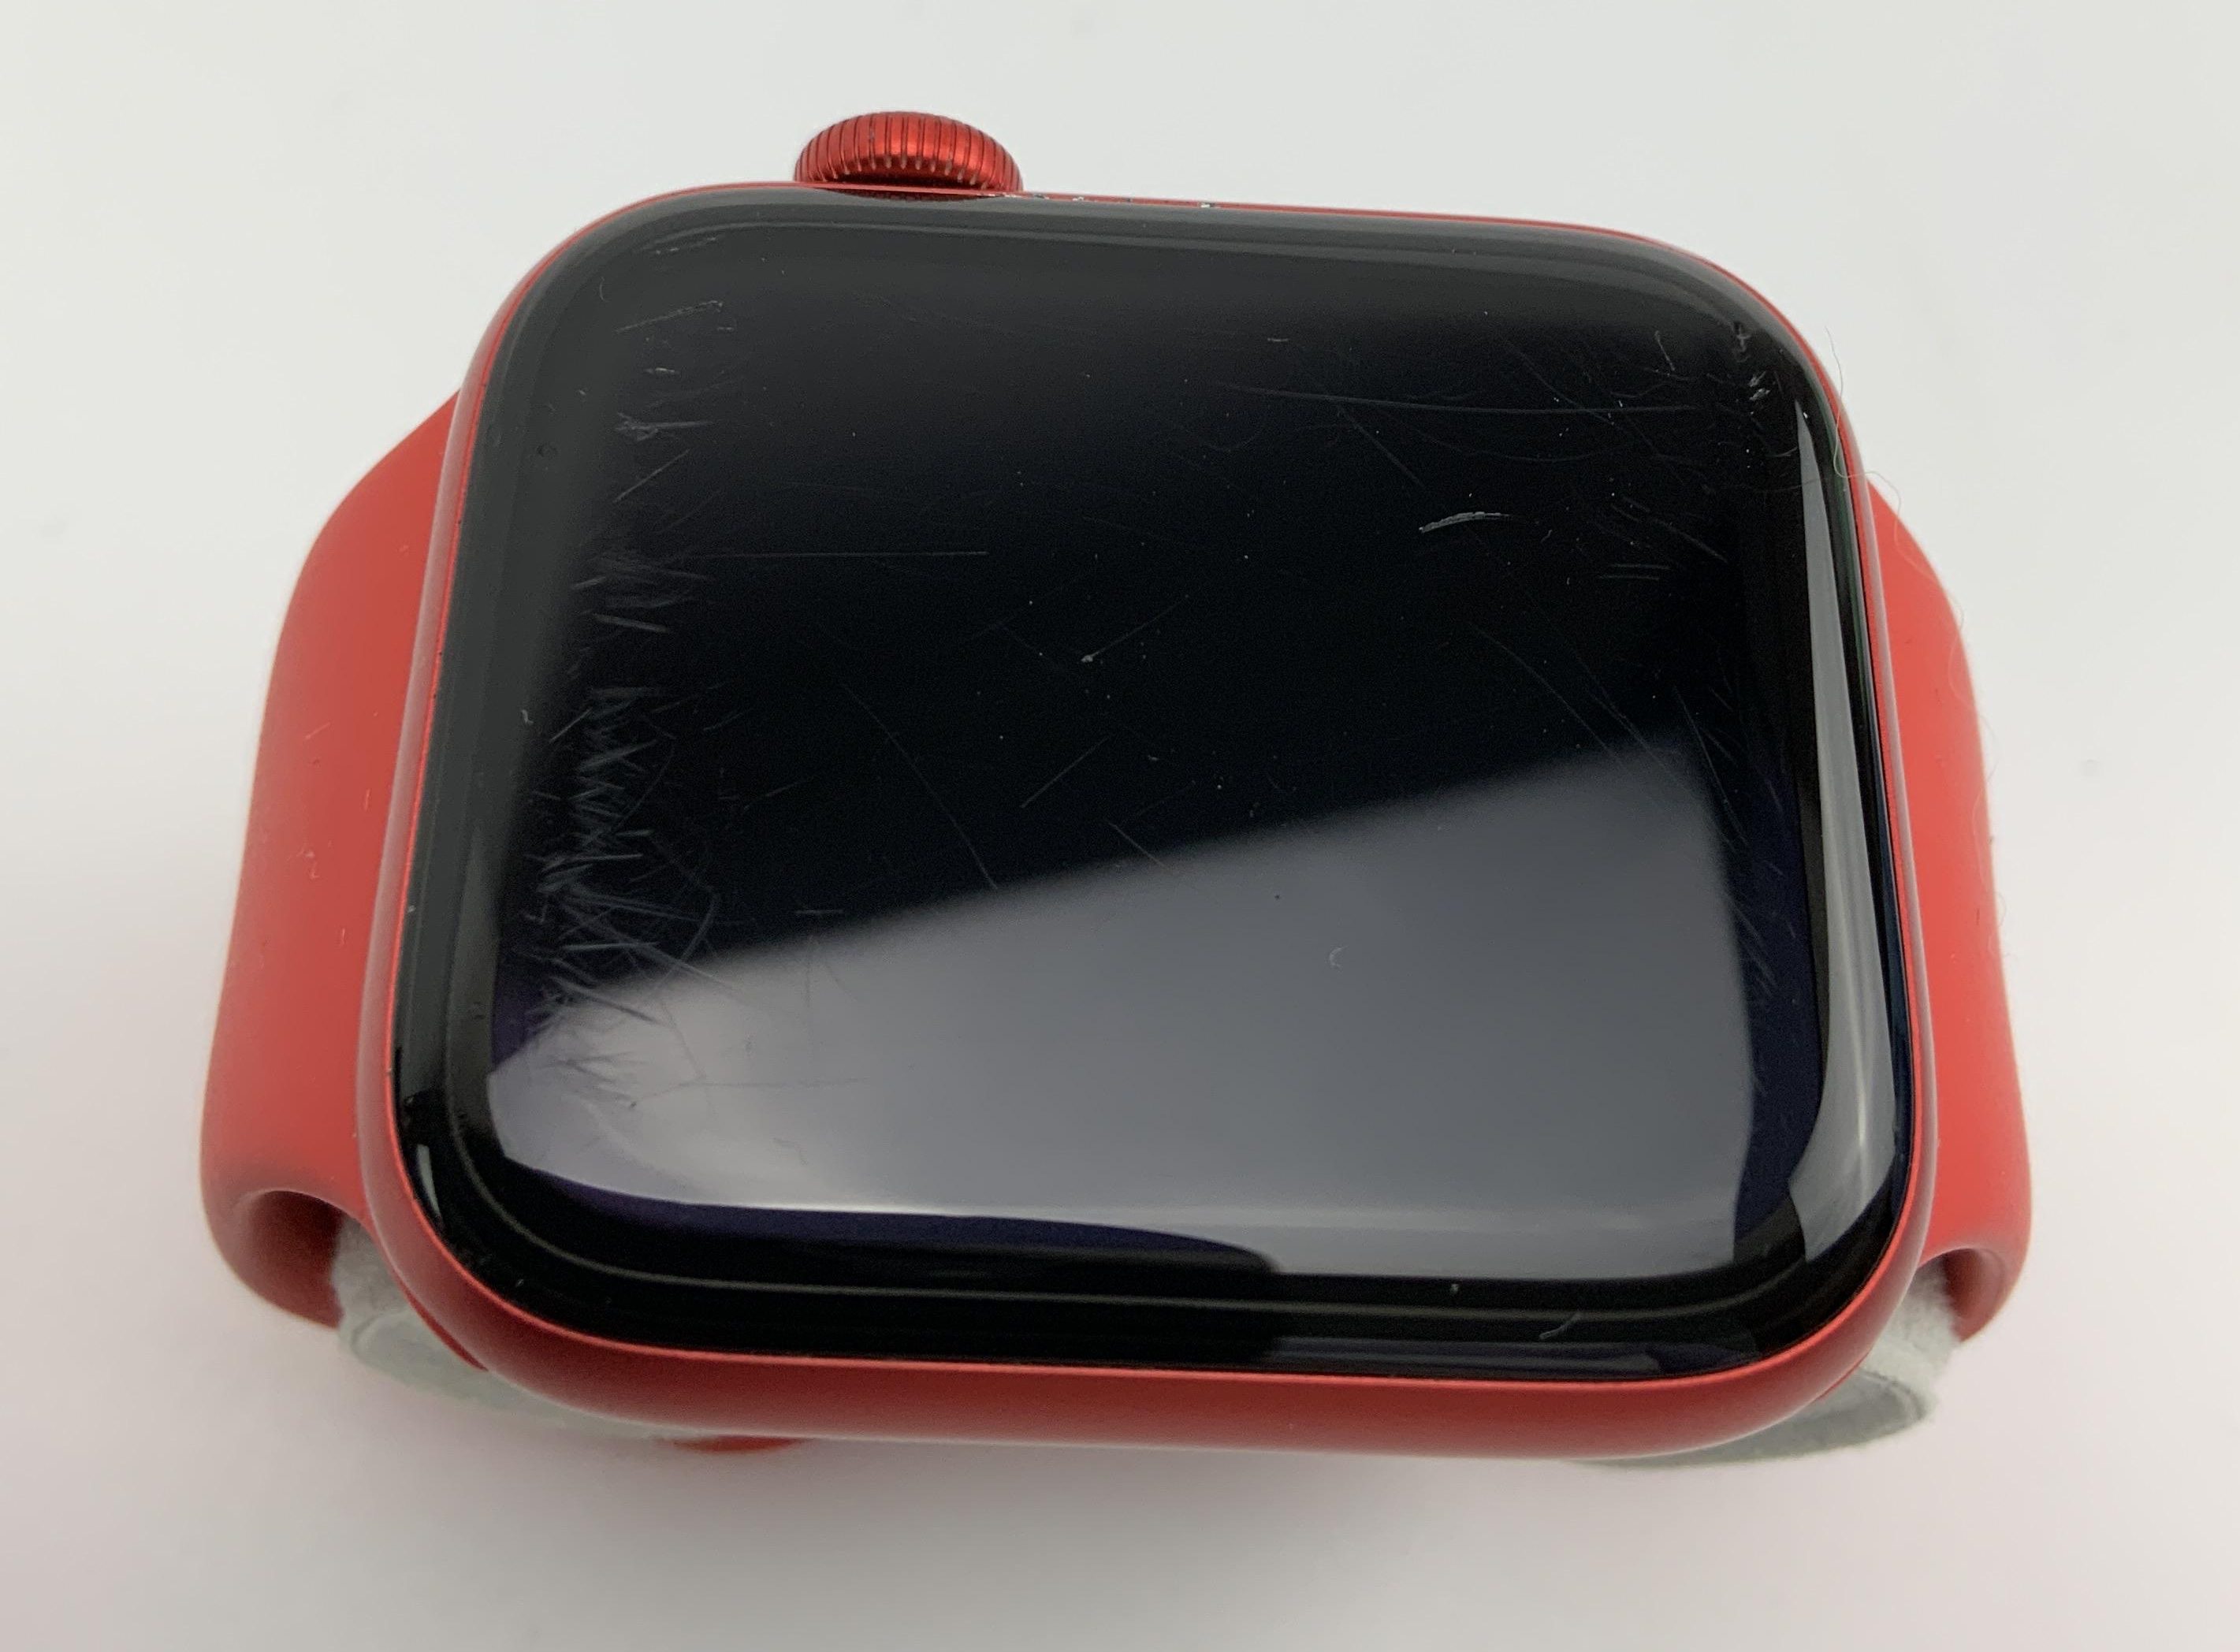 Watch Series 6 Aluminum (44mm), Red, imagen 3